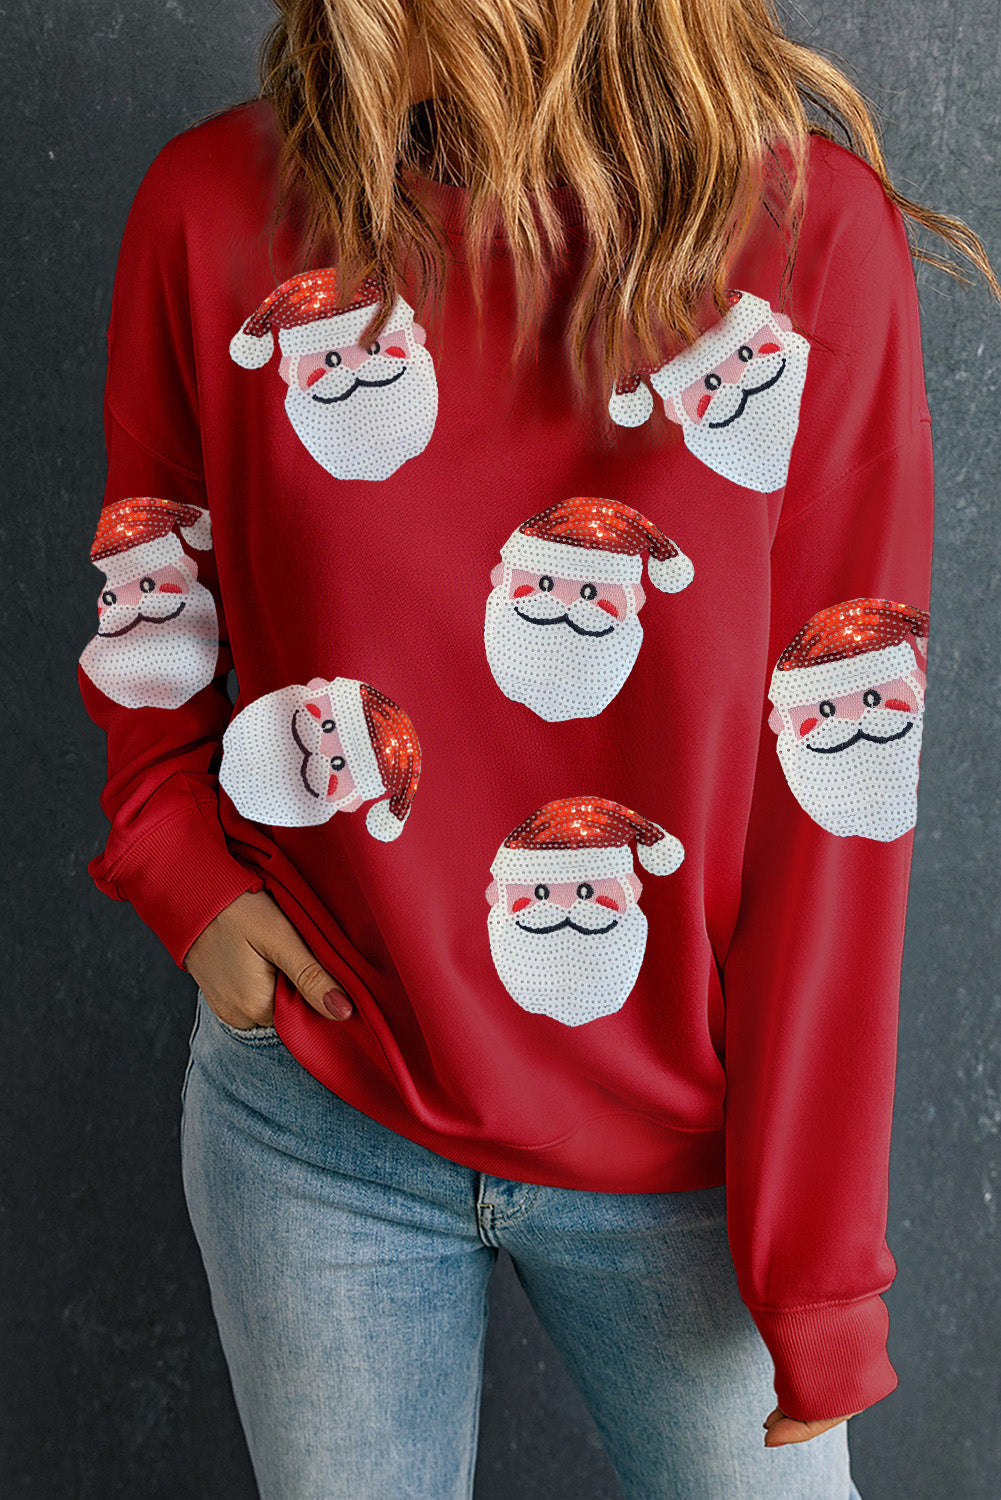 Santa Claus Sequin Graphic Sweatshirt